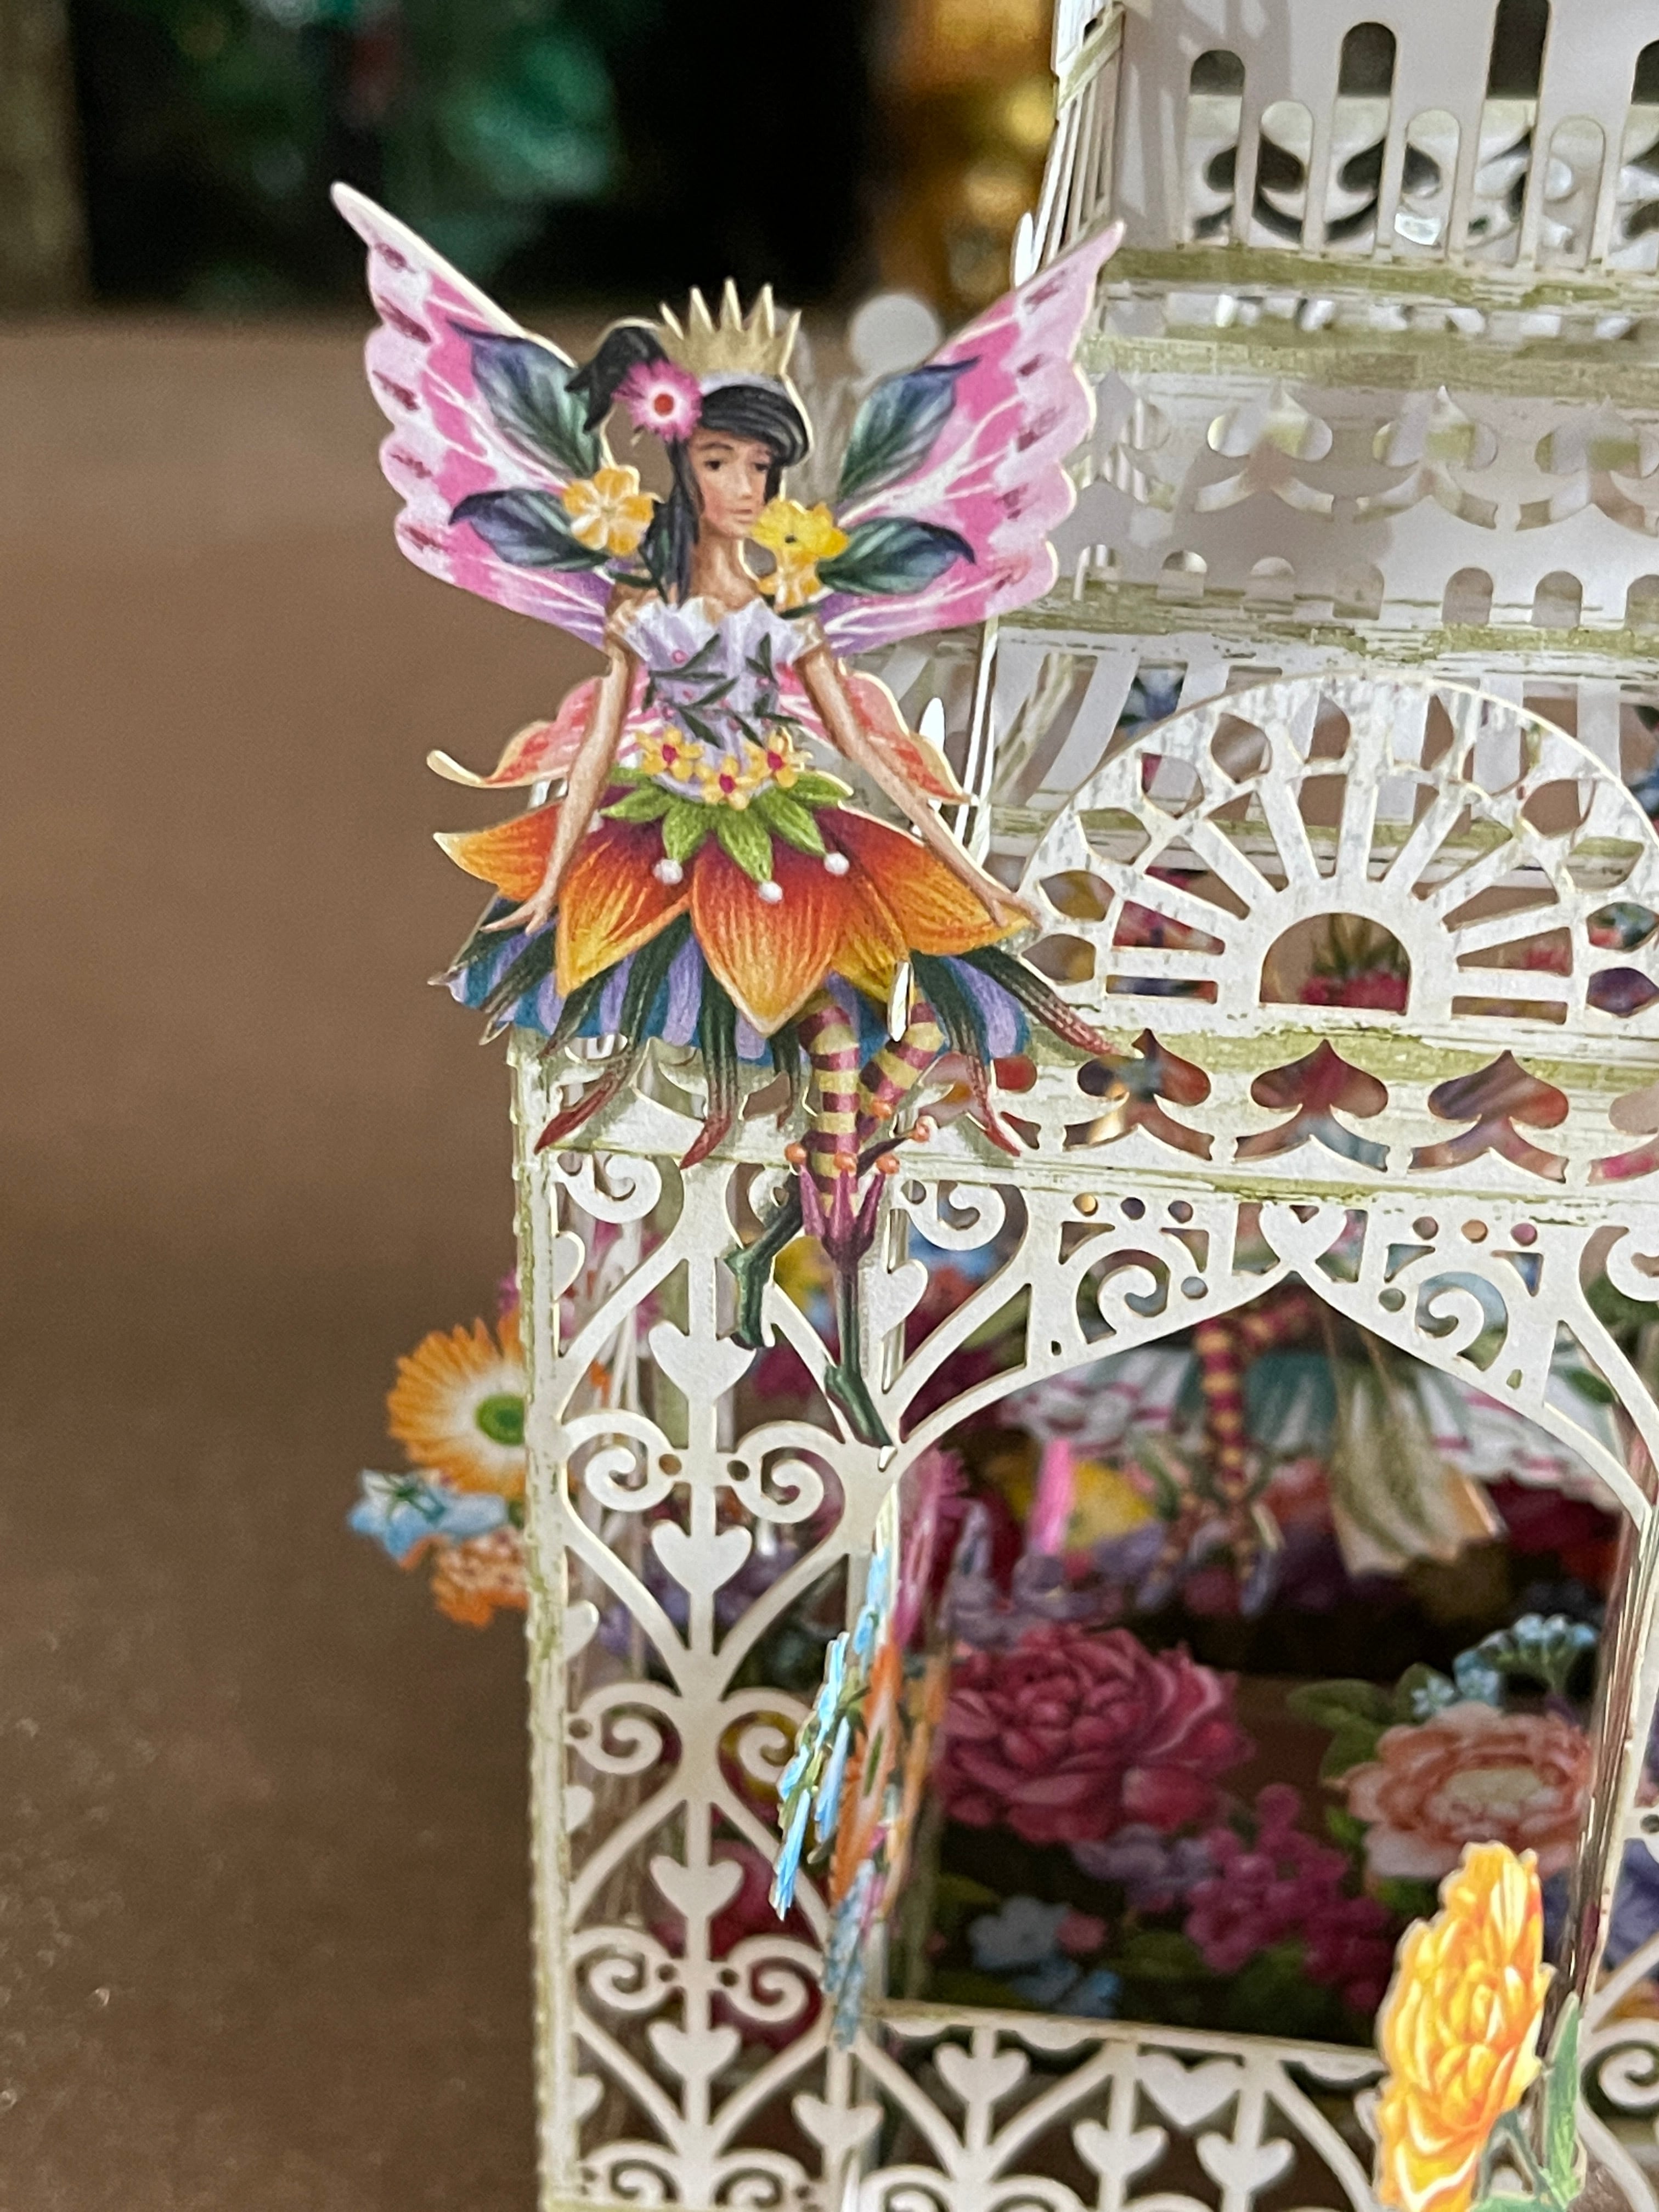 『Me & McQ』花の妖精たち “Flower Fairies” 3D Birthday Card イギリスより